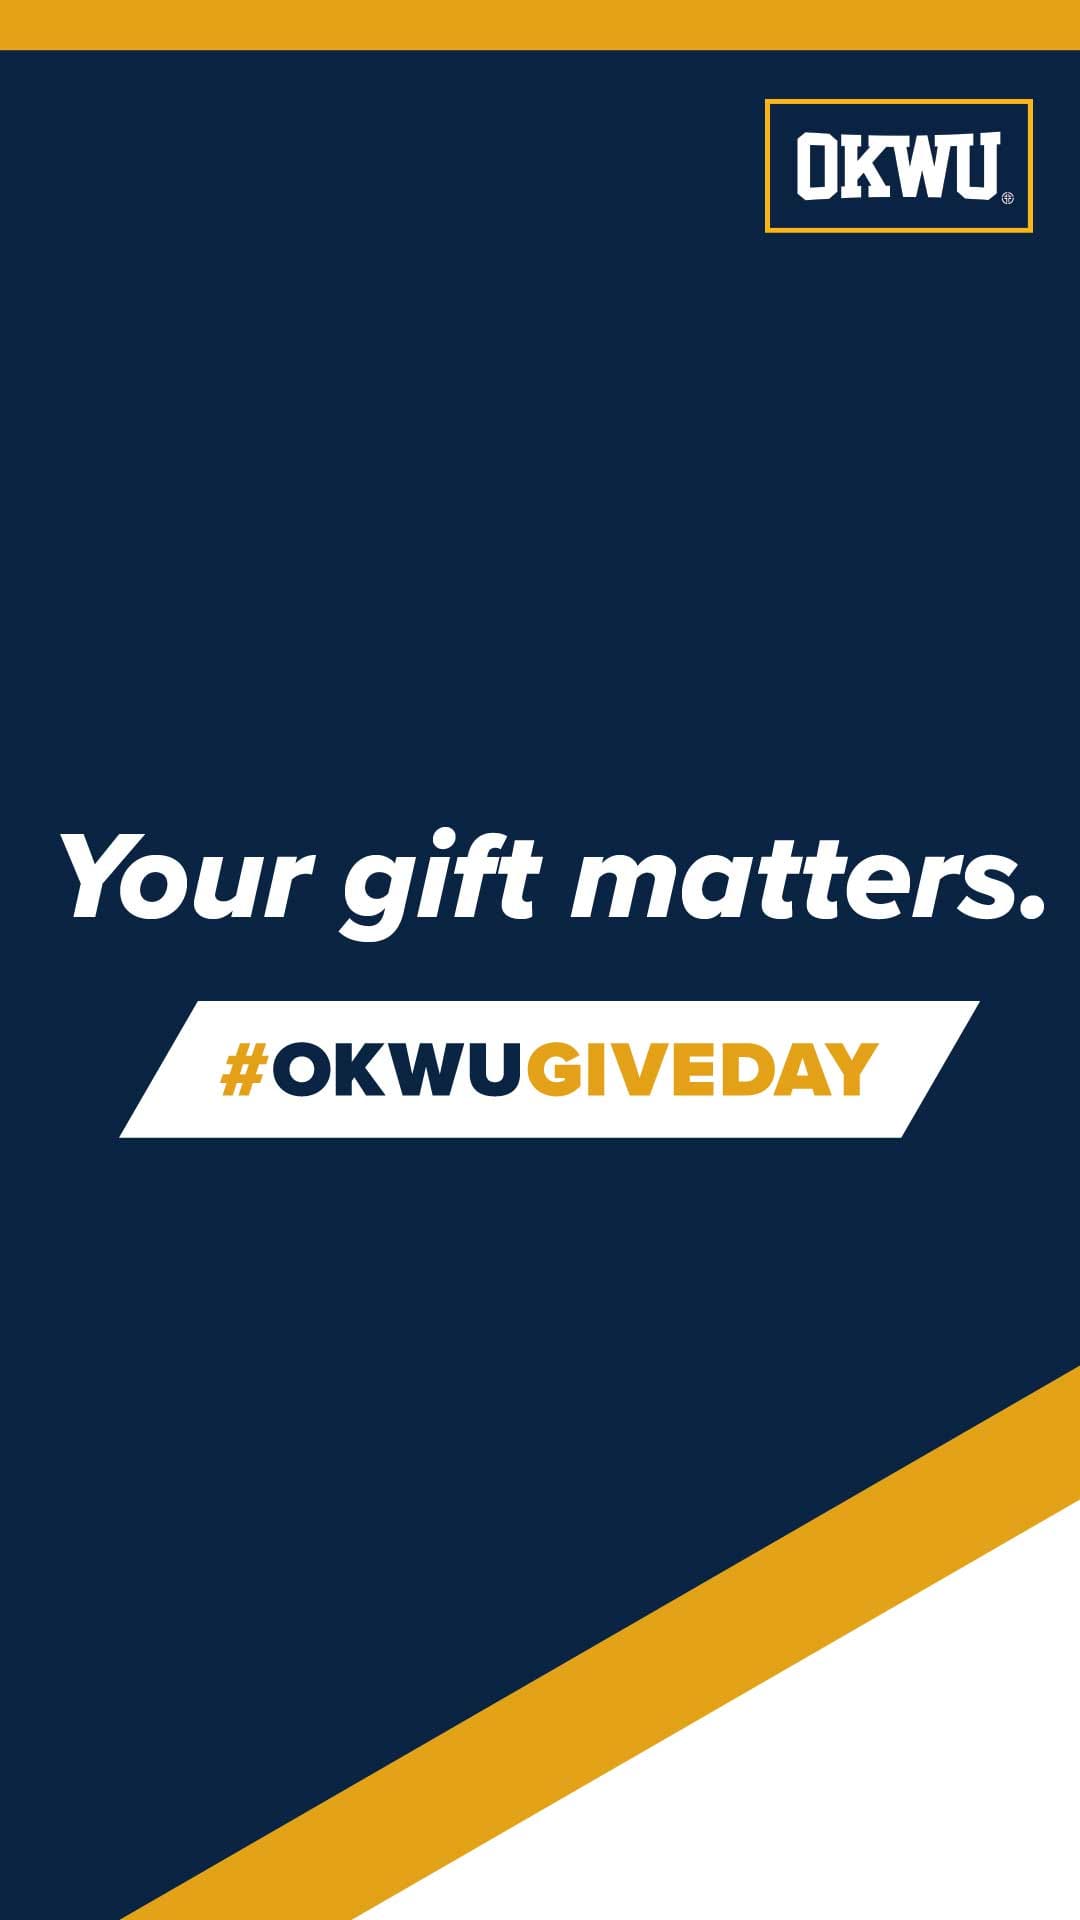 Thank you! #okwugiveday